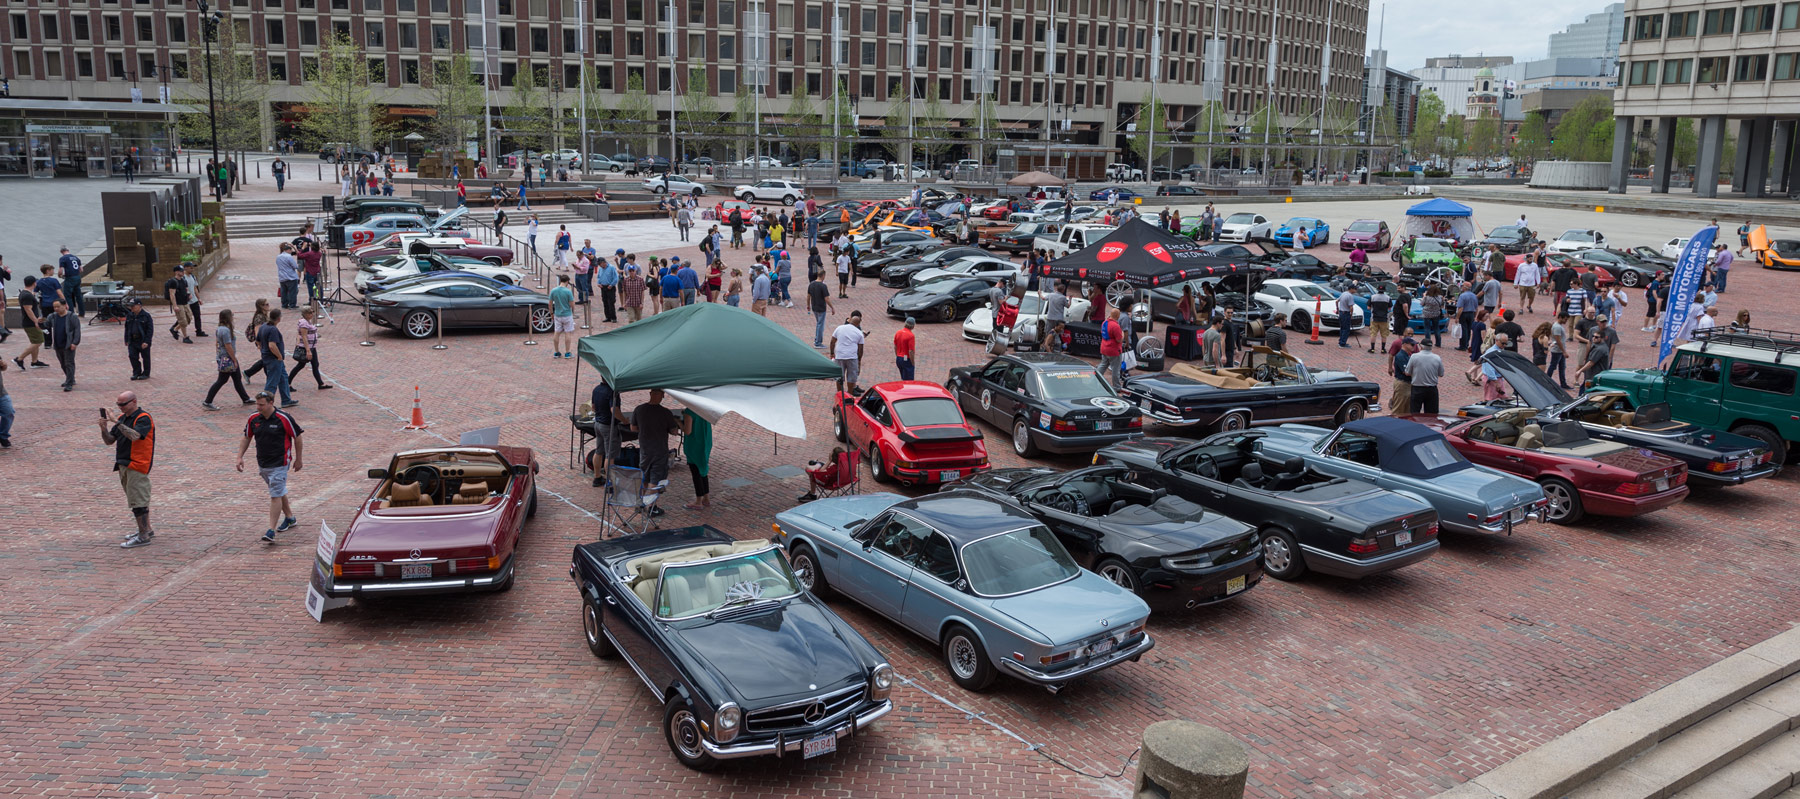 Art of the Automobile car show Boston, MA